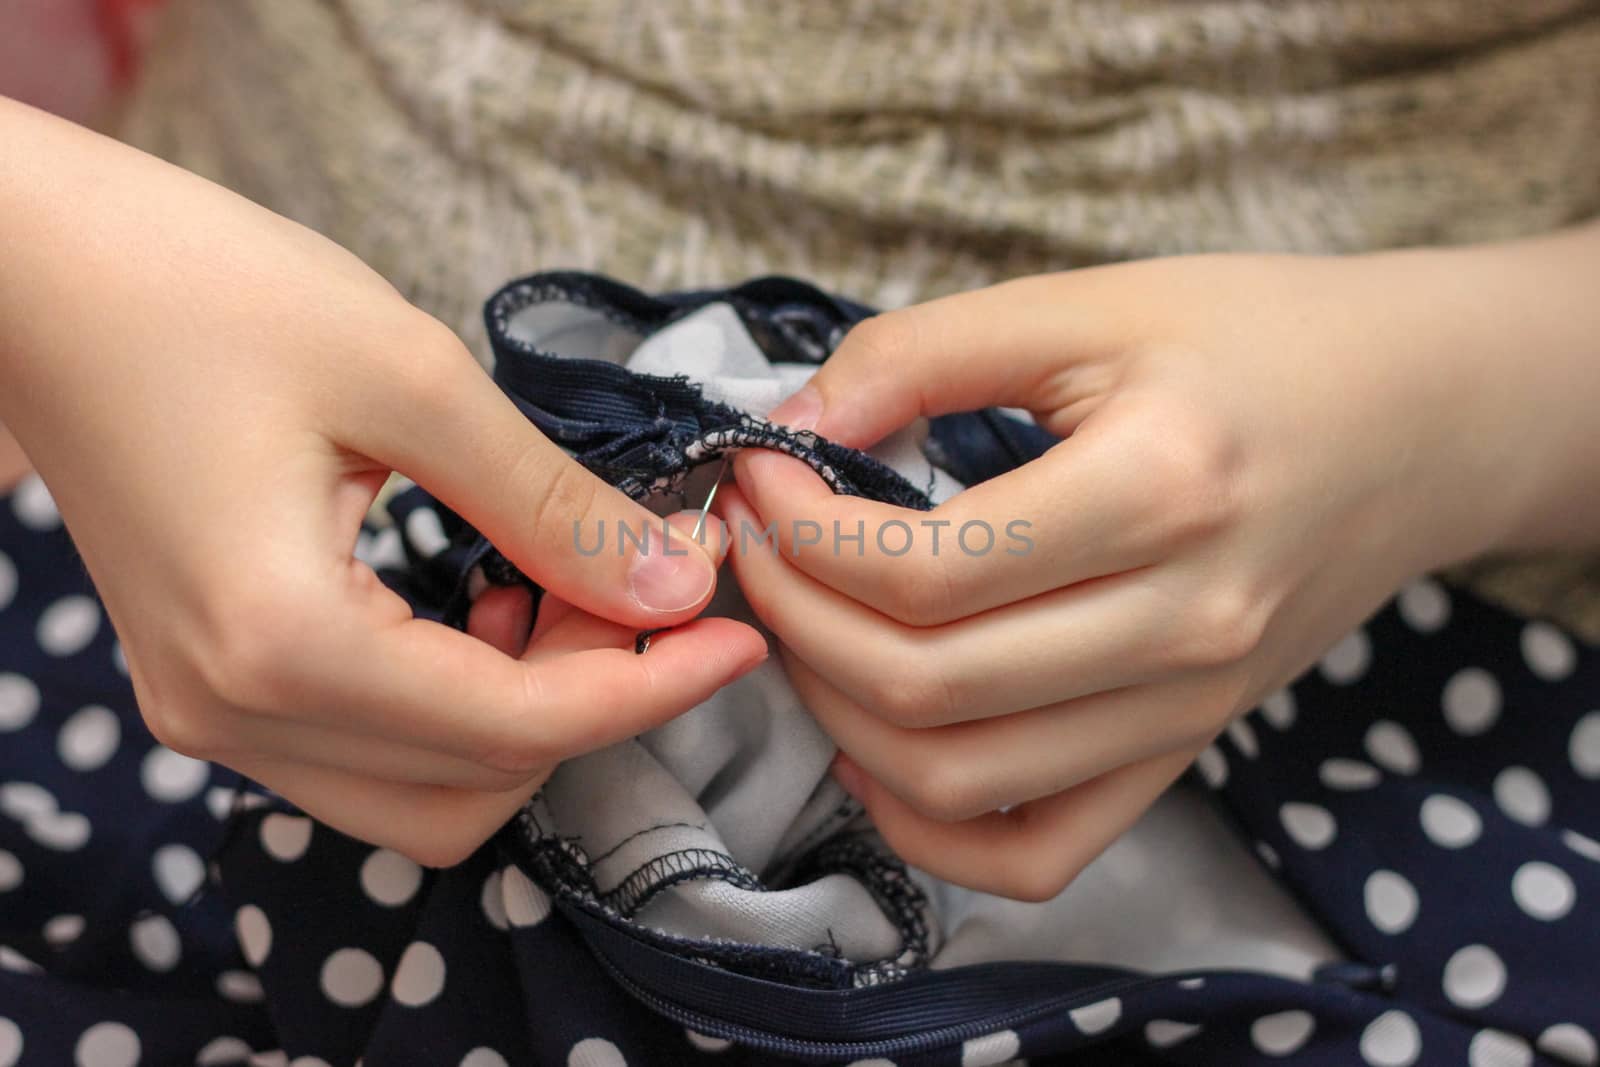 The girl sews with a needle. Needlework. Polka dot fabric